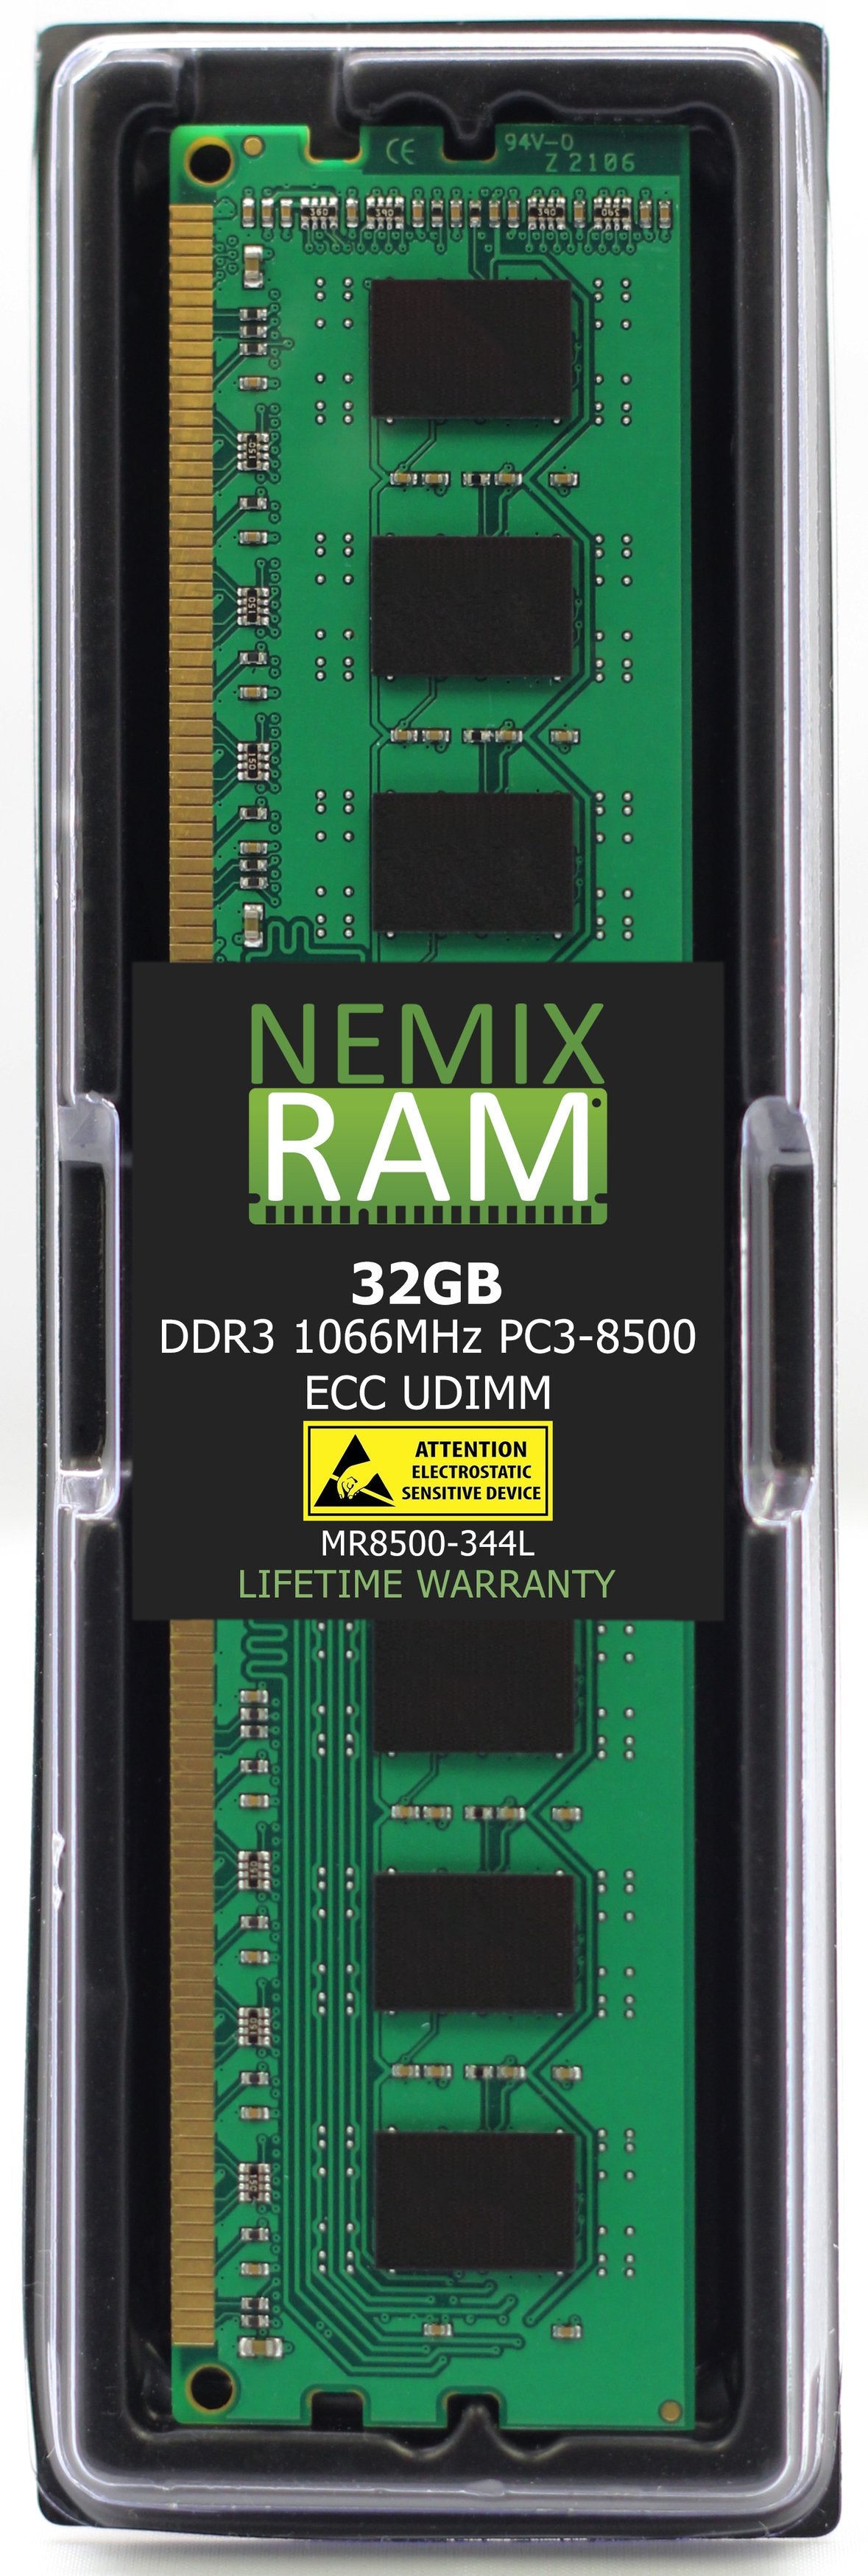 NEC Express5800 R120d Memory Module N8102-492F 32GB DDR3 1066MHZ PC3-8500 RDIMM